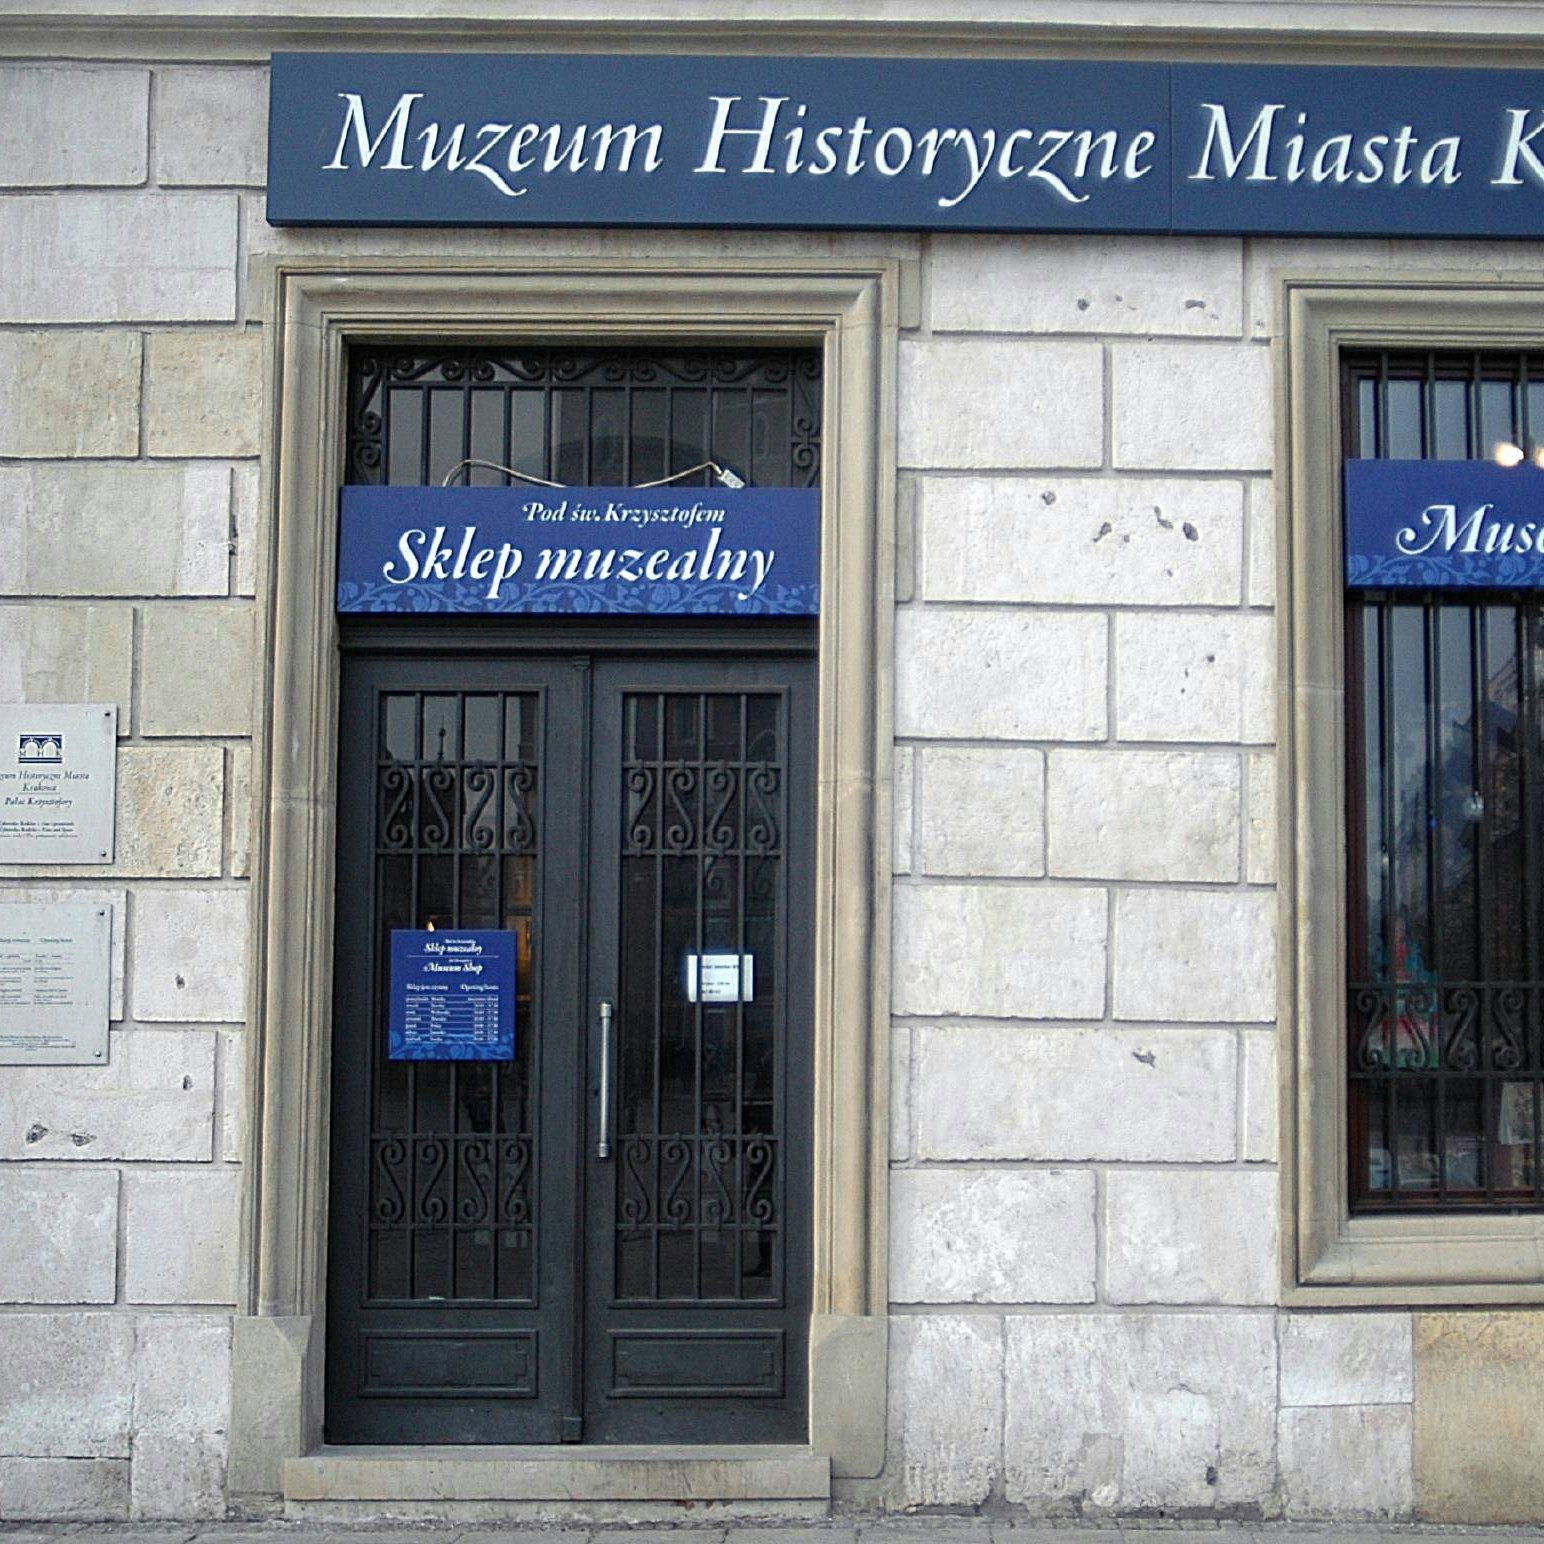 Historical Museum of Kraków